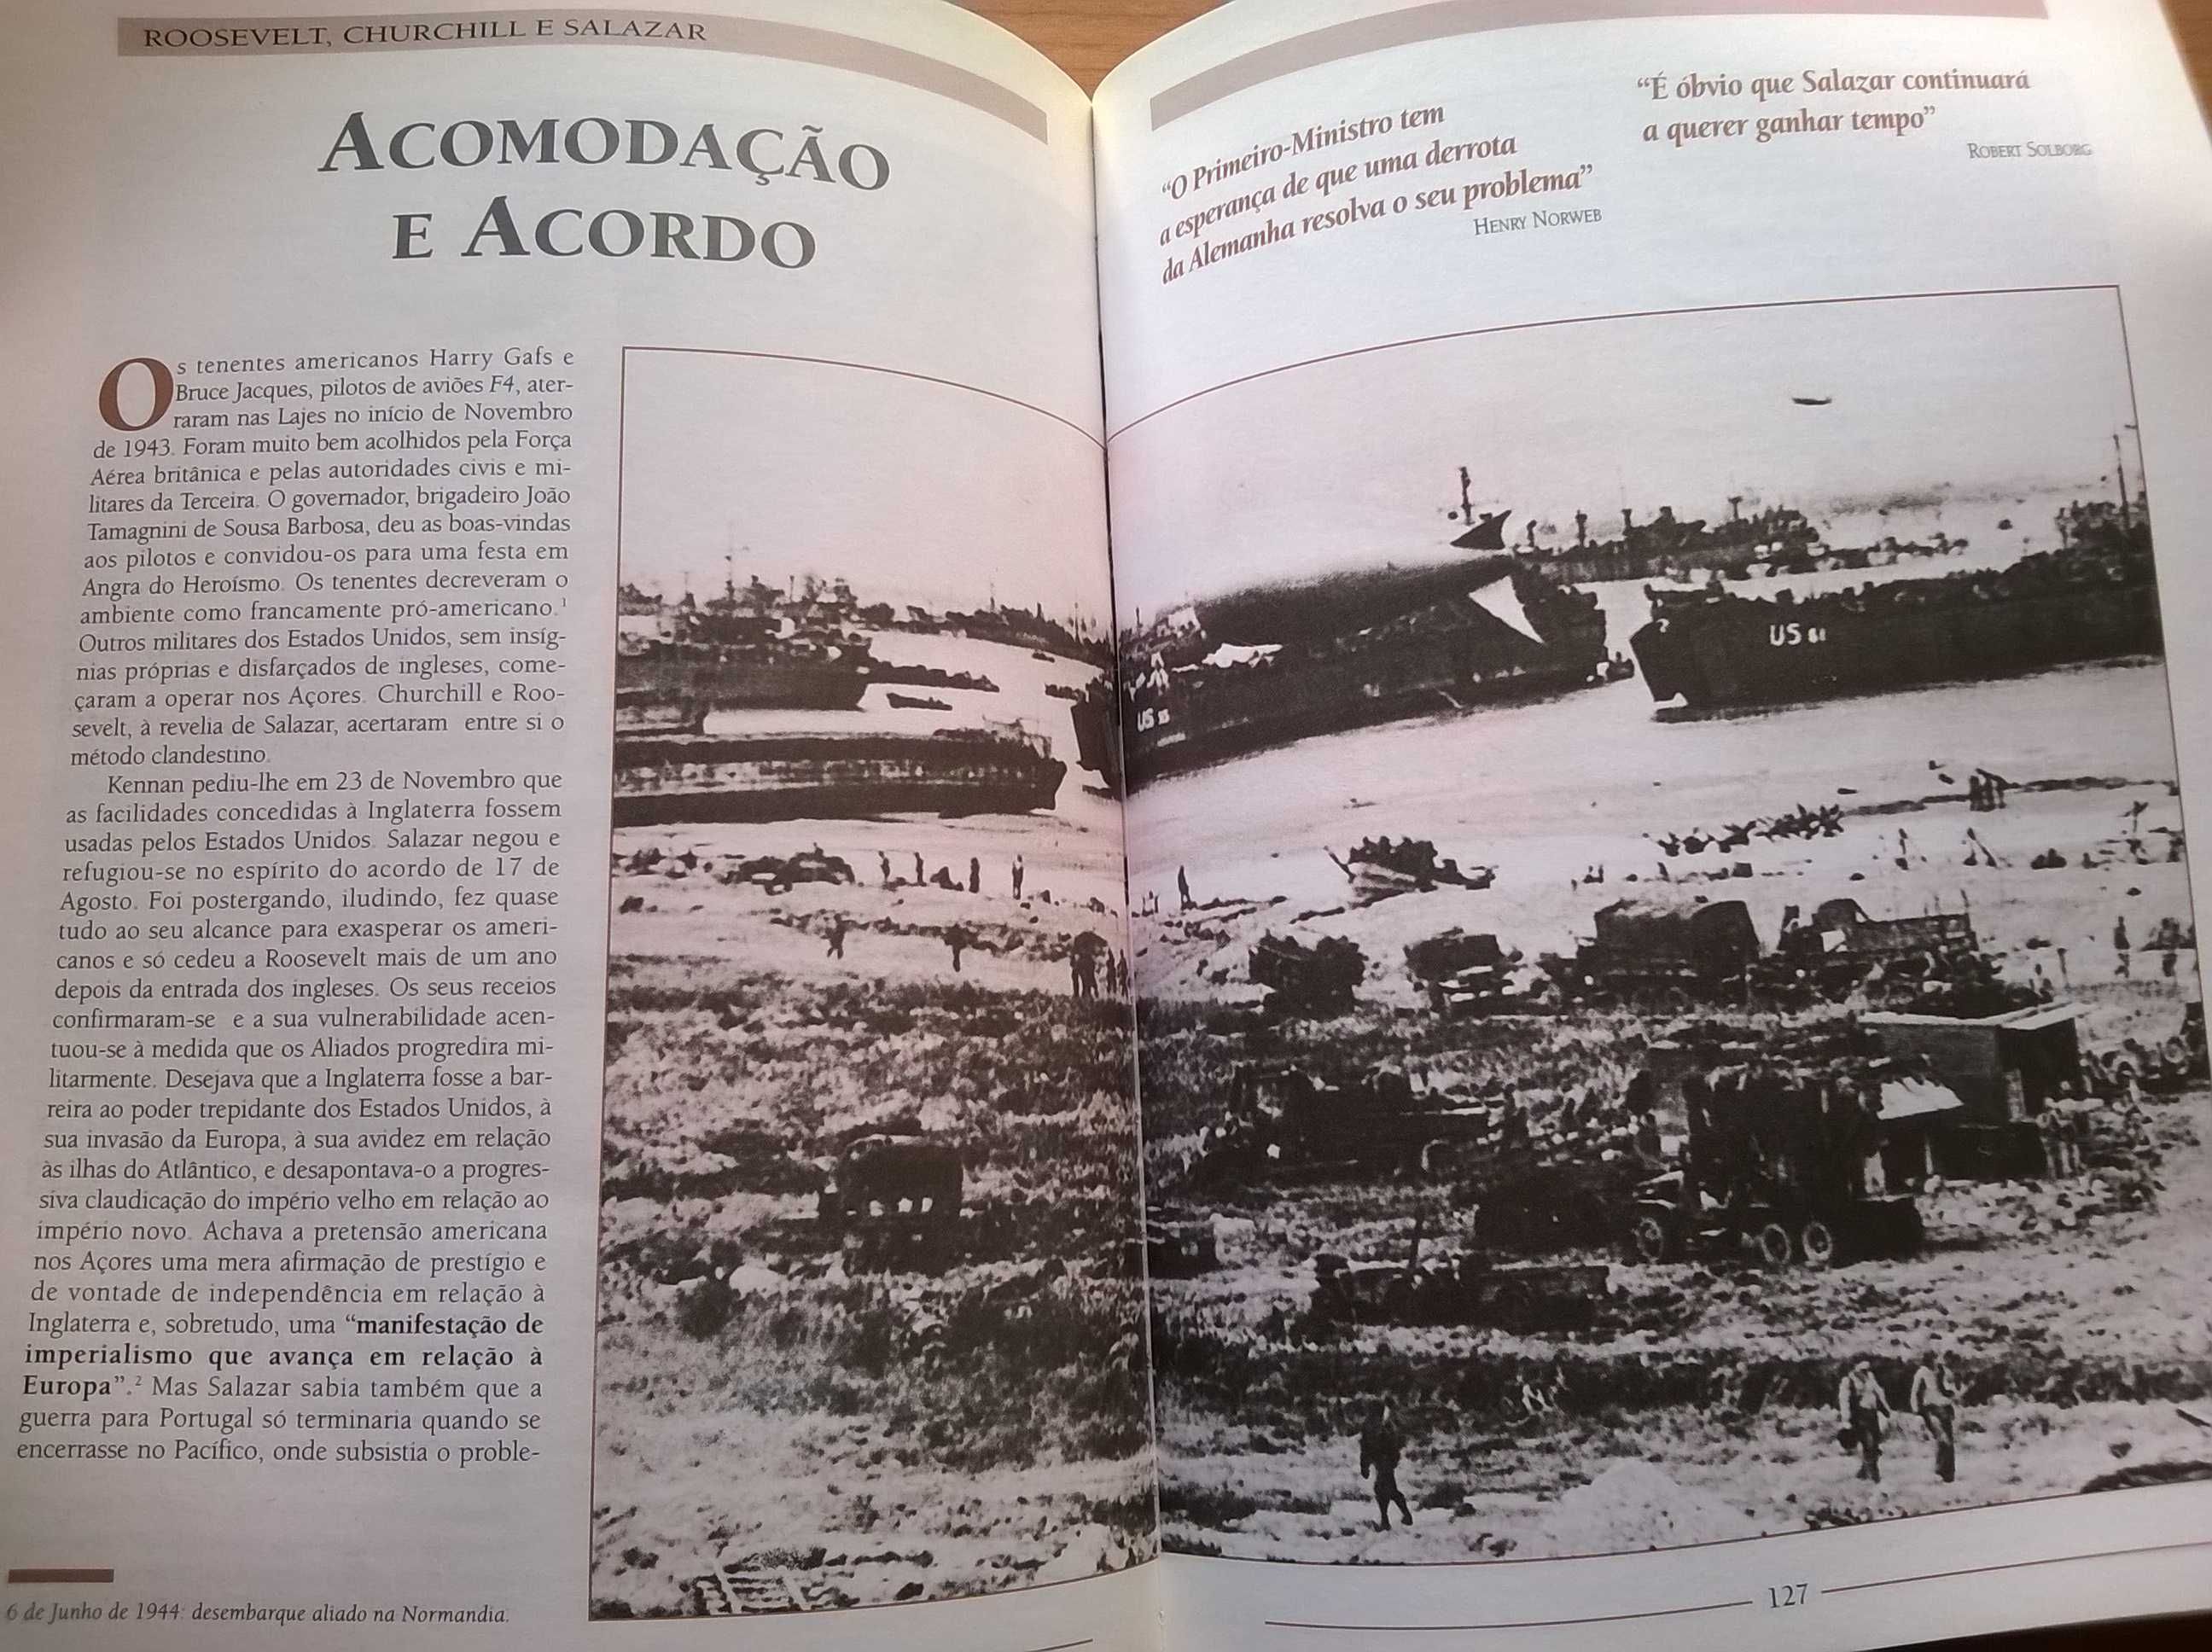 Roosevelt, Churchill e Salazar - A Luta pelos Açores 1941/1945